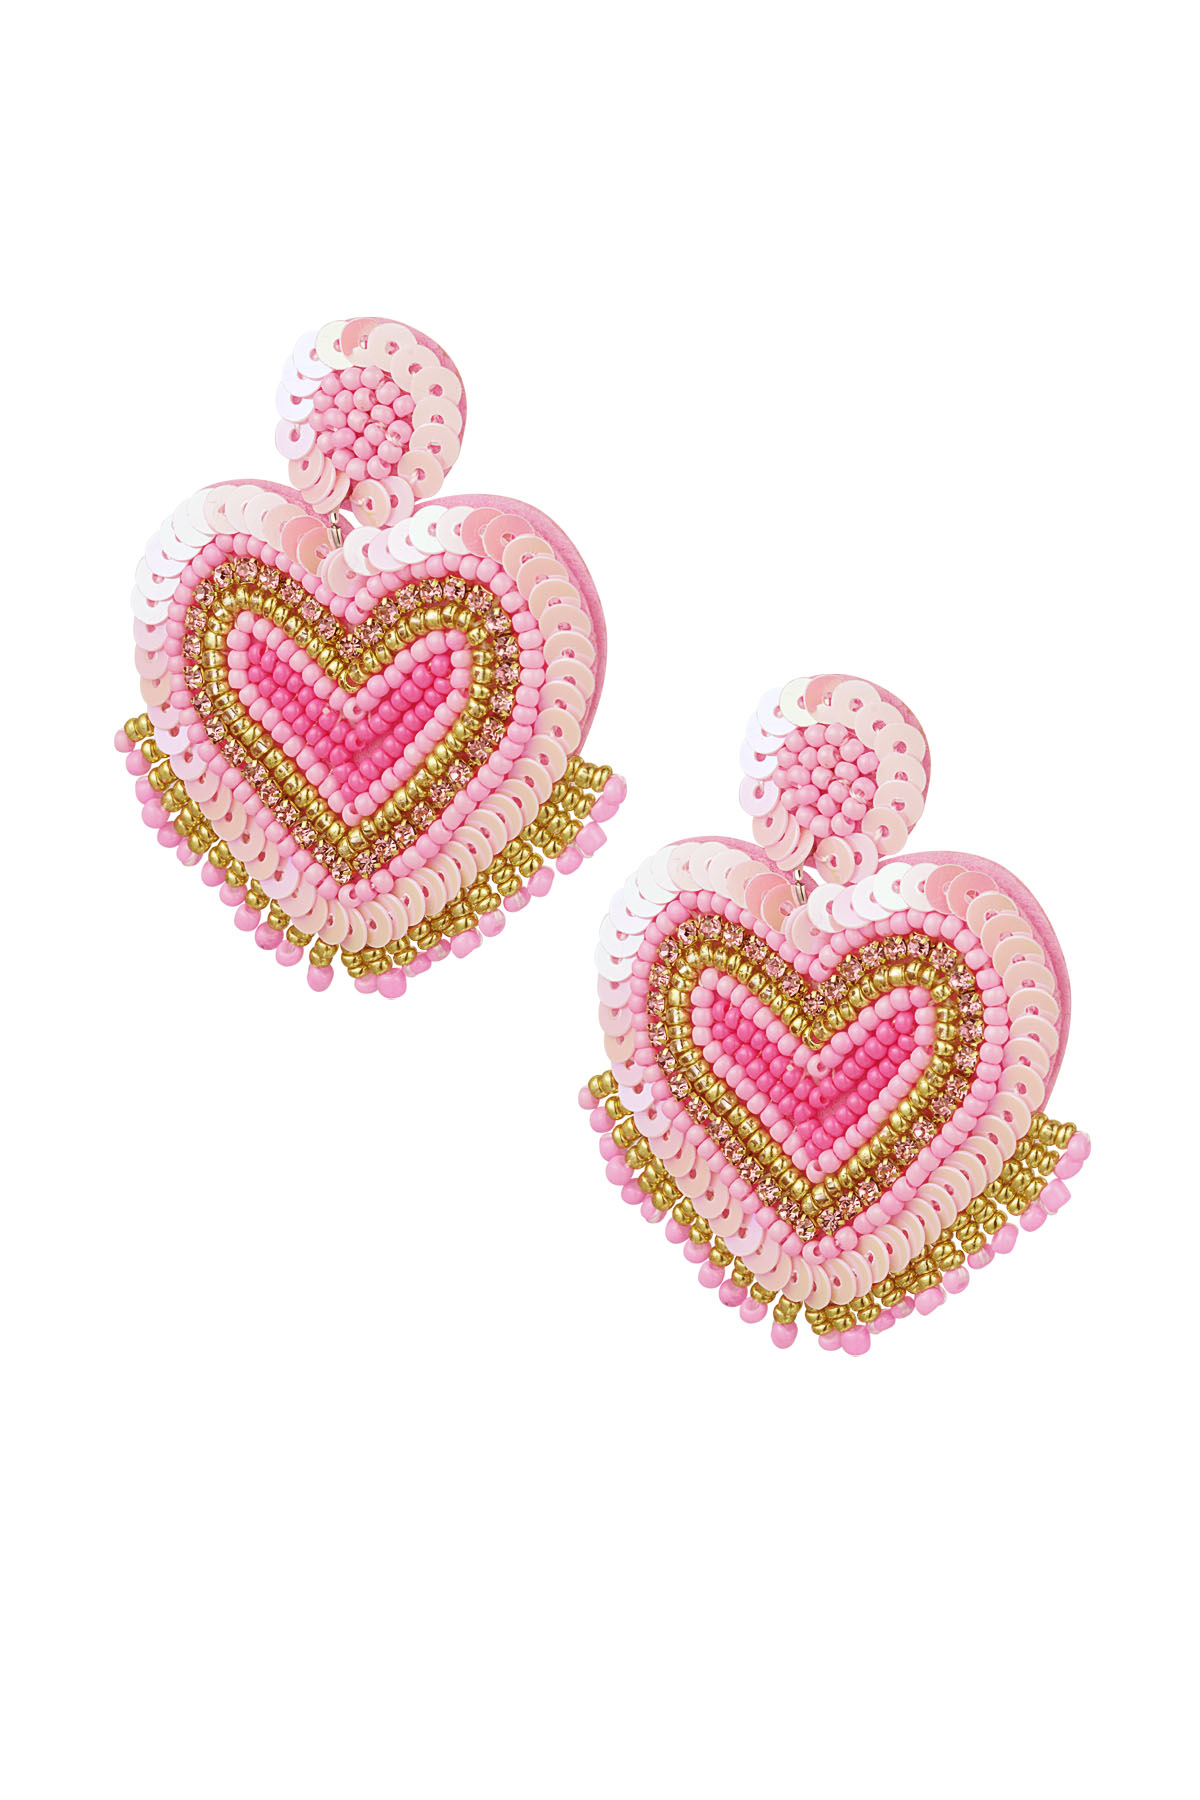 Perlenohrringe Herz mit Fransen - rosa Glasperlen